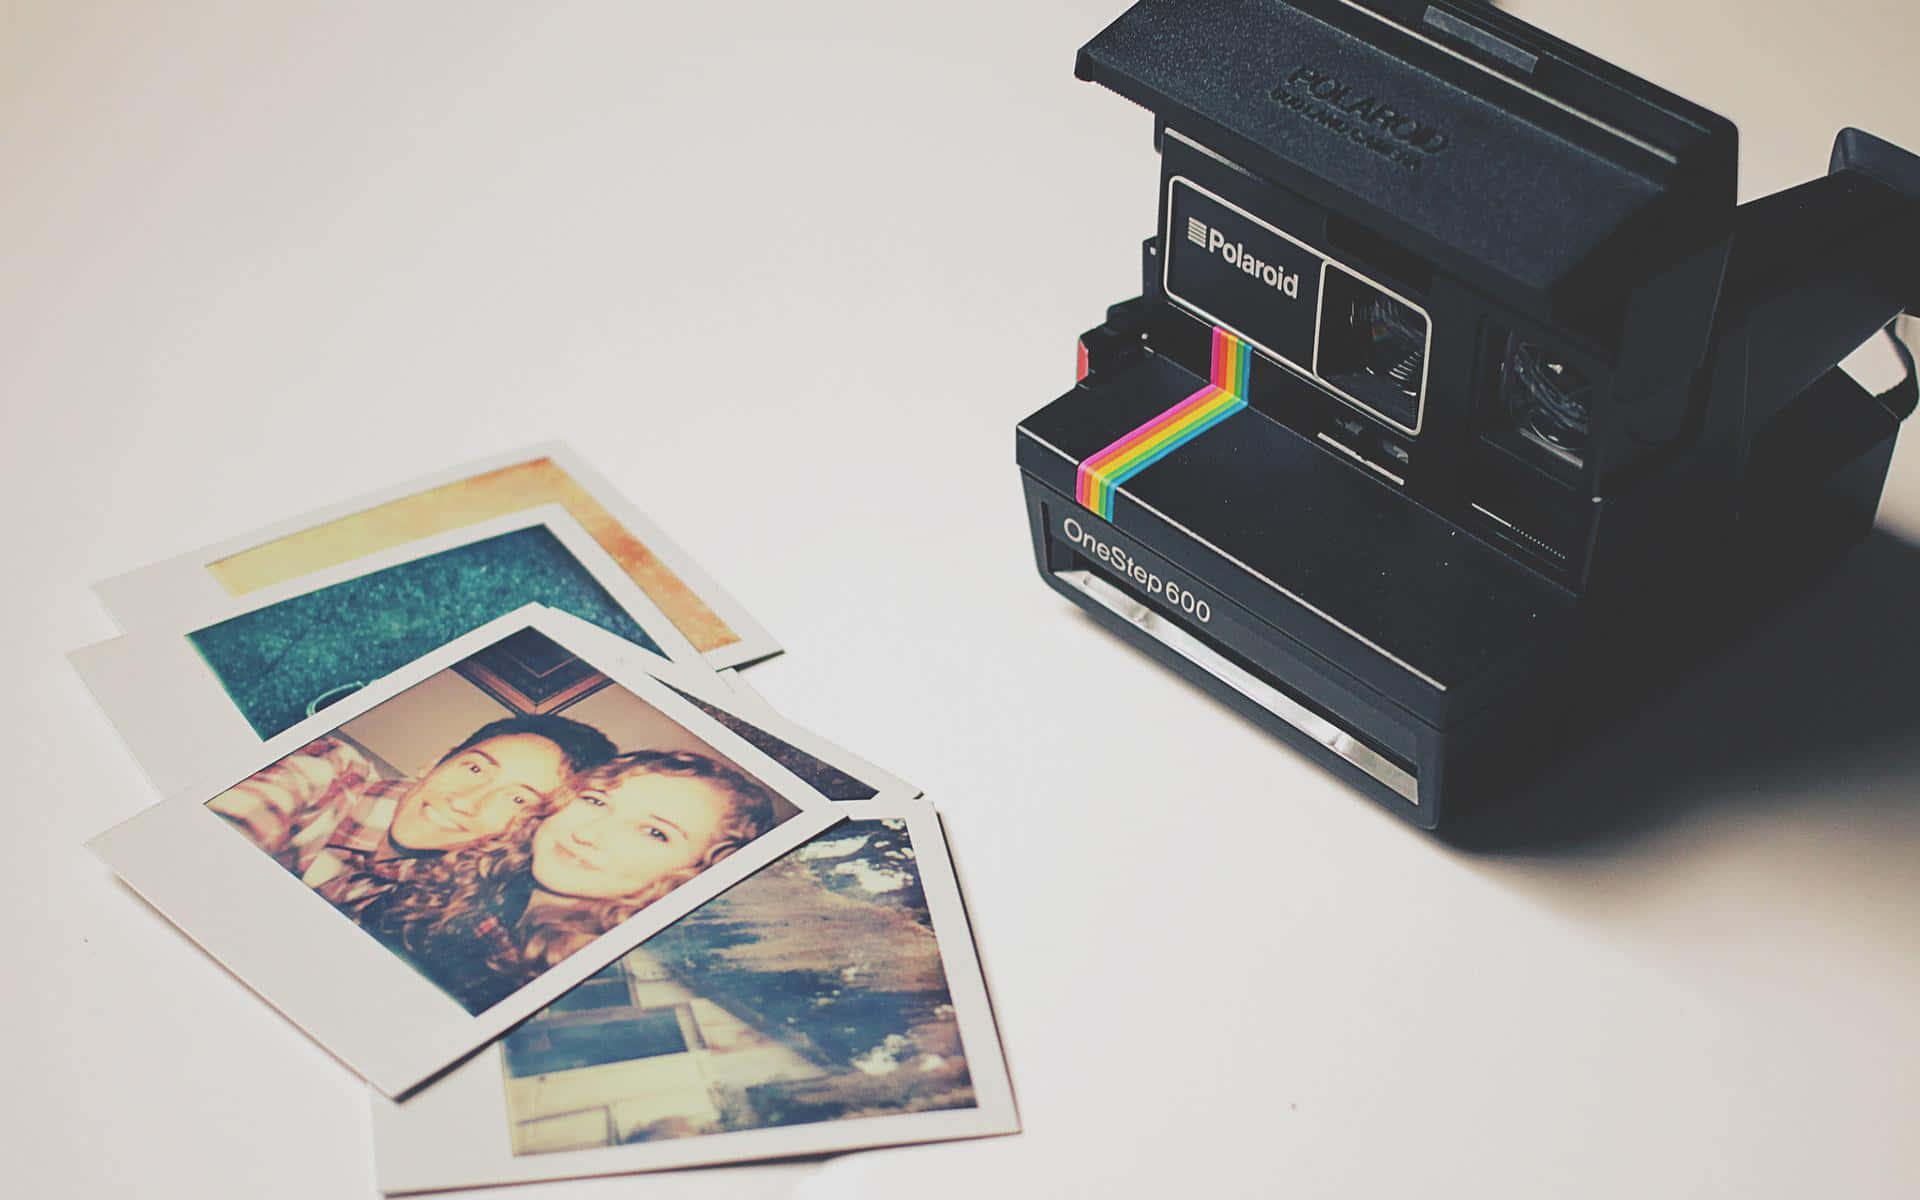 A Polaroid Camera